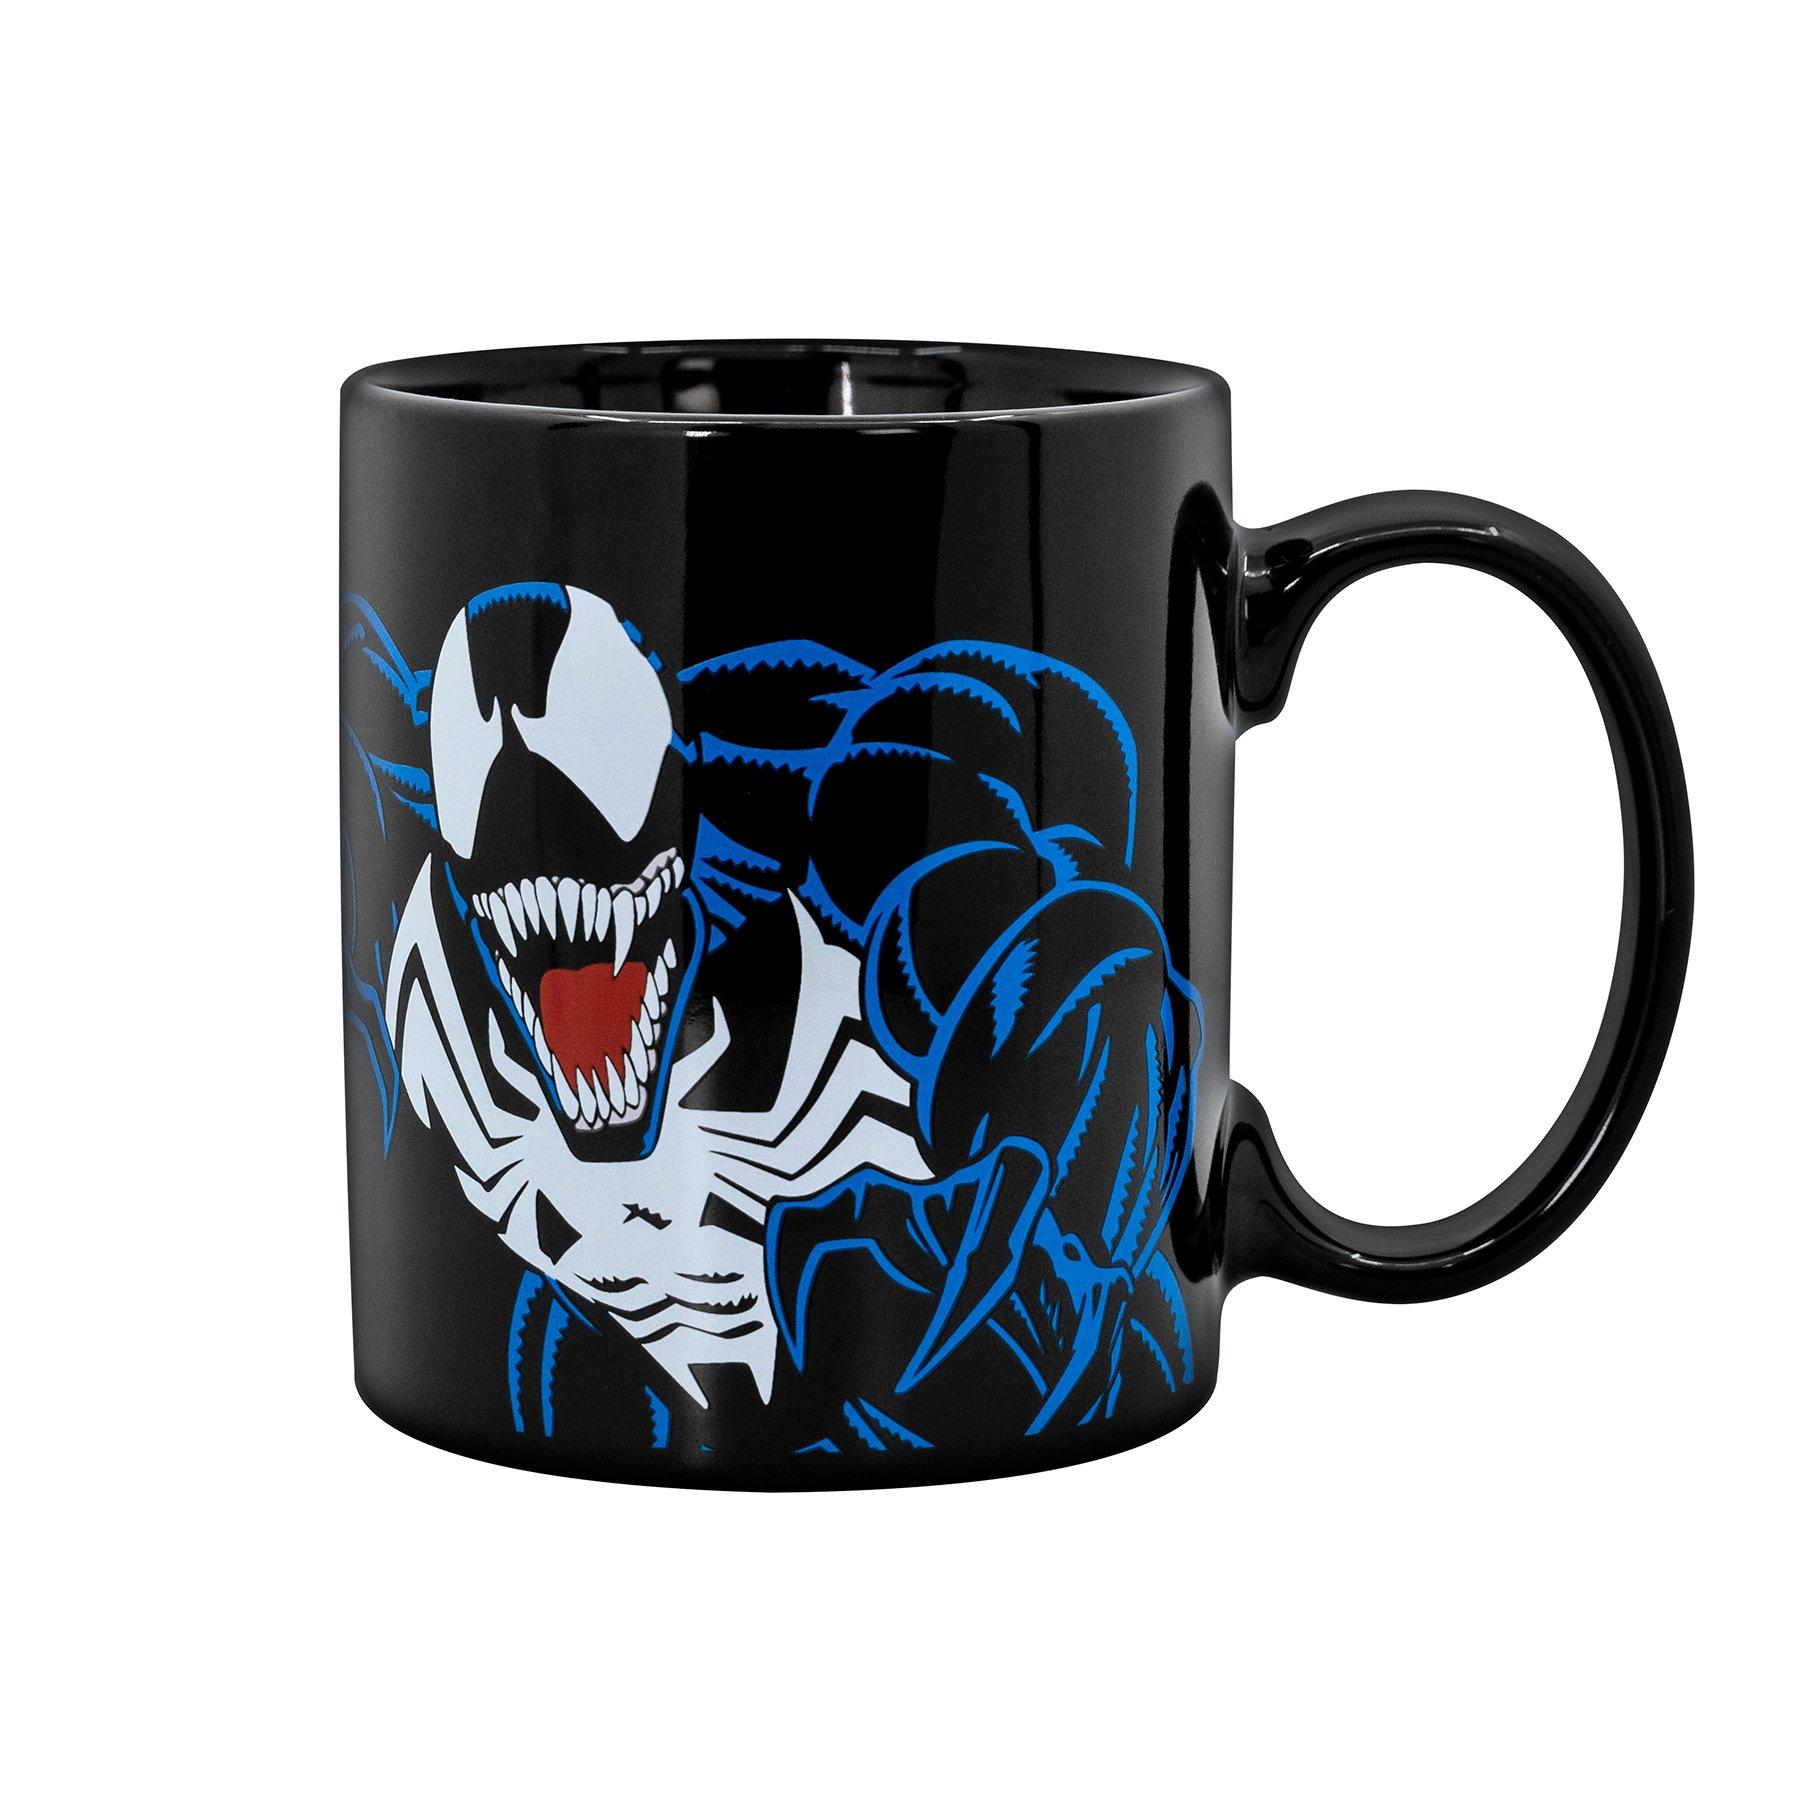 https://media.gamestop.com/i/gamestop/20005652_ALT03/Marvels-Venom-Mug-Warmer-with-Mug?$pdp$